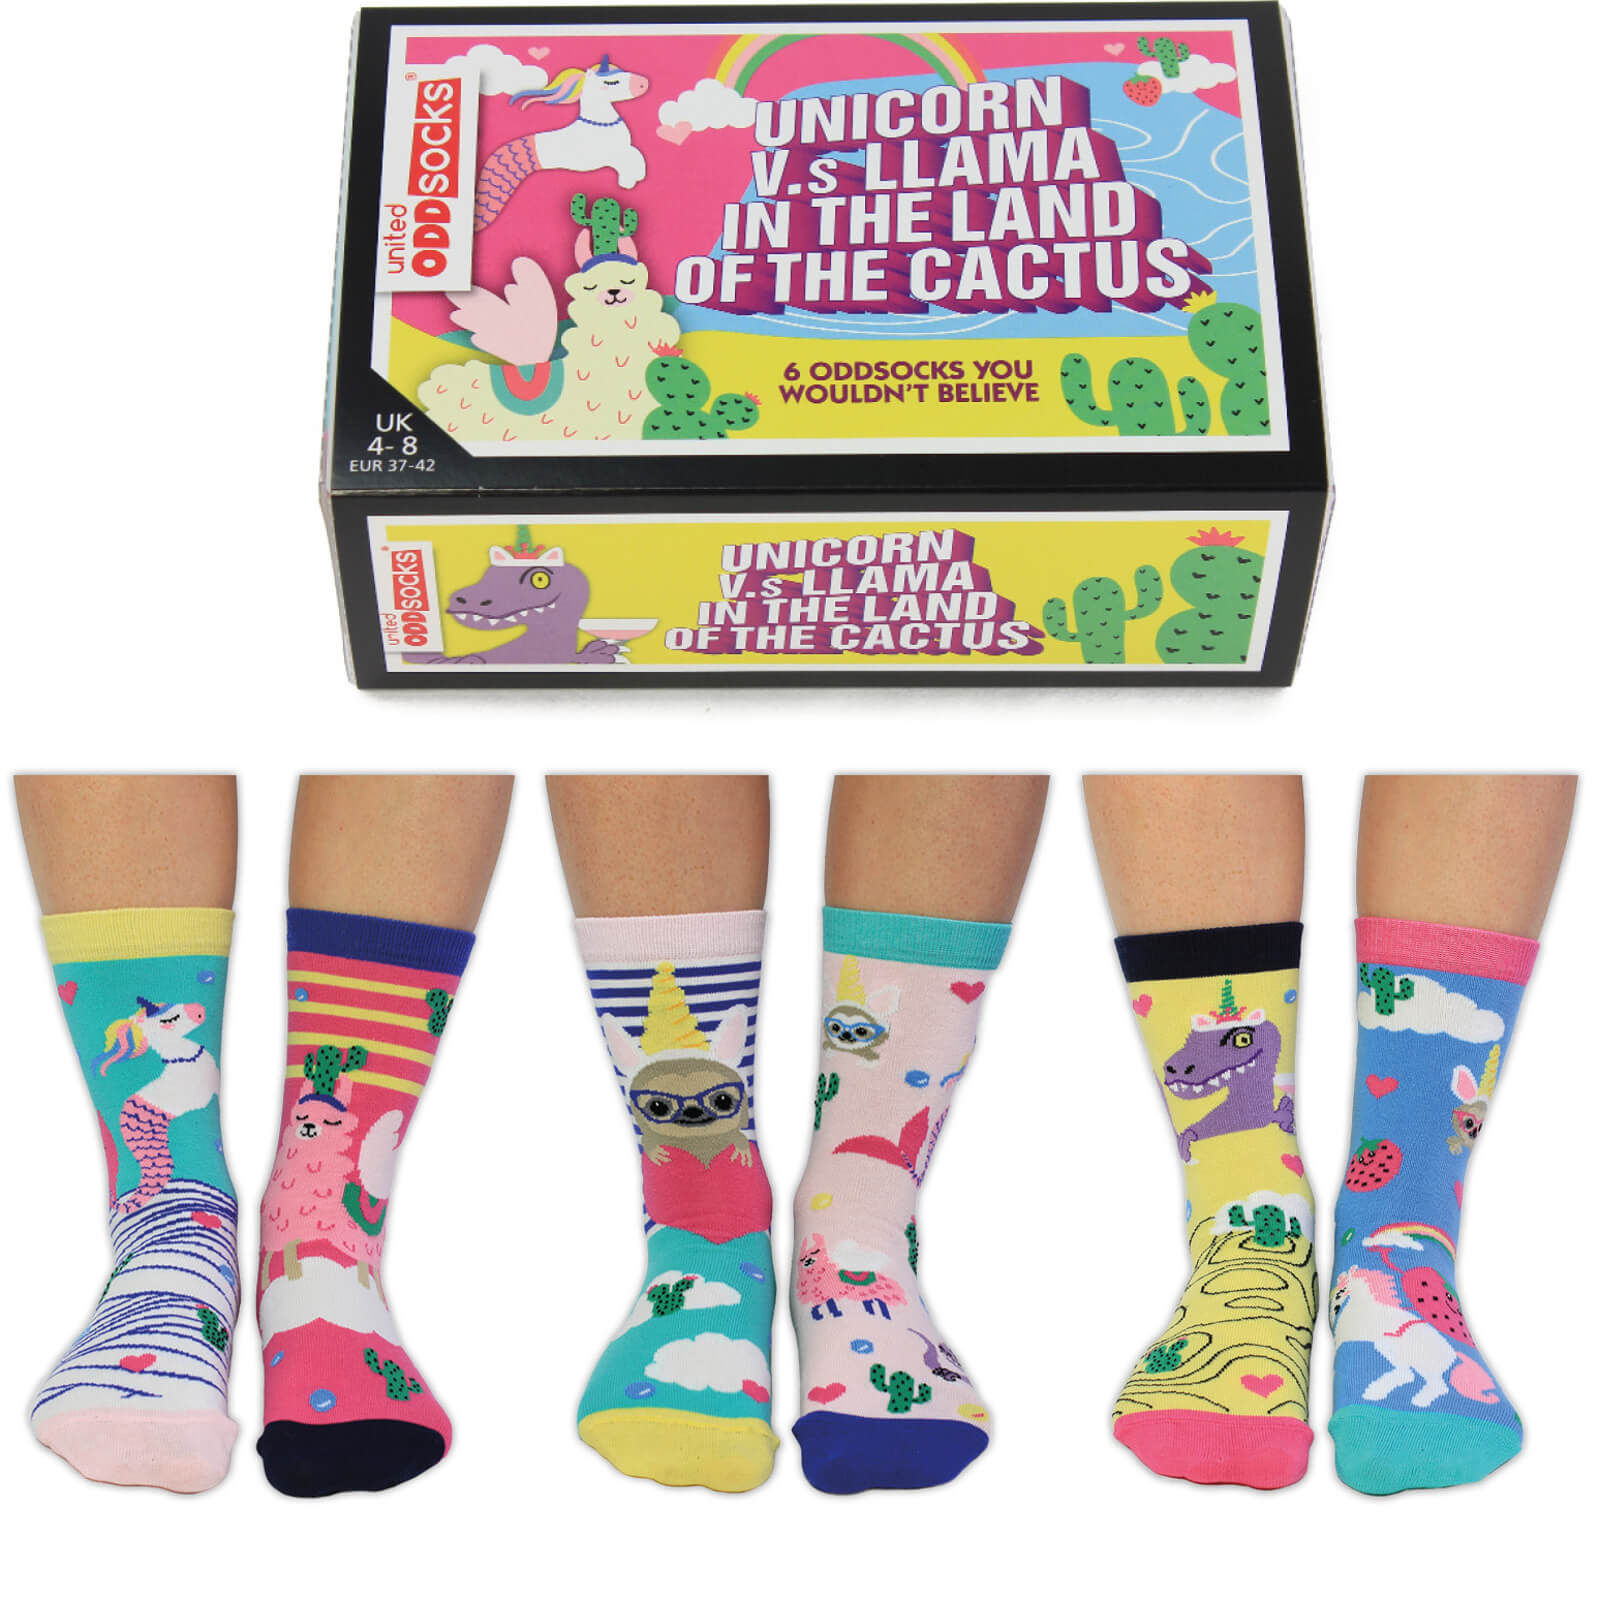 United Oddsocks Women's Unicorn vs Llama Socks Gift Set (UK 4-8)